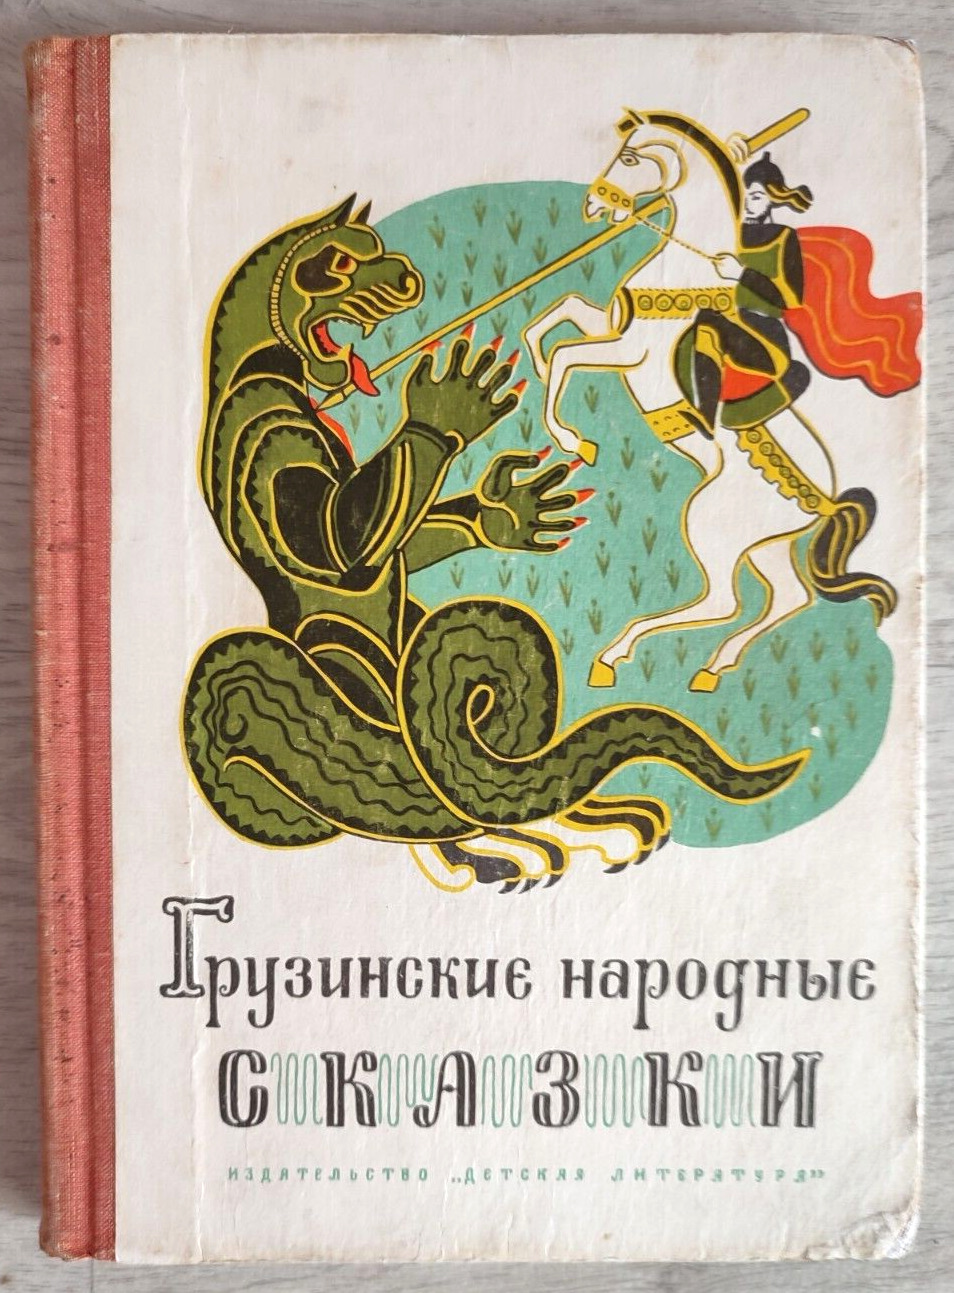 1970 Georgian folk tales Folk Folklore Ethnos Caucasus Children Russian book